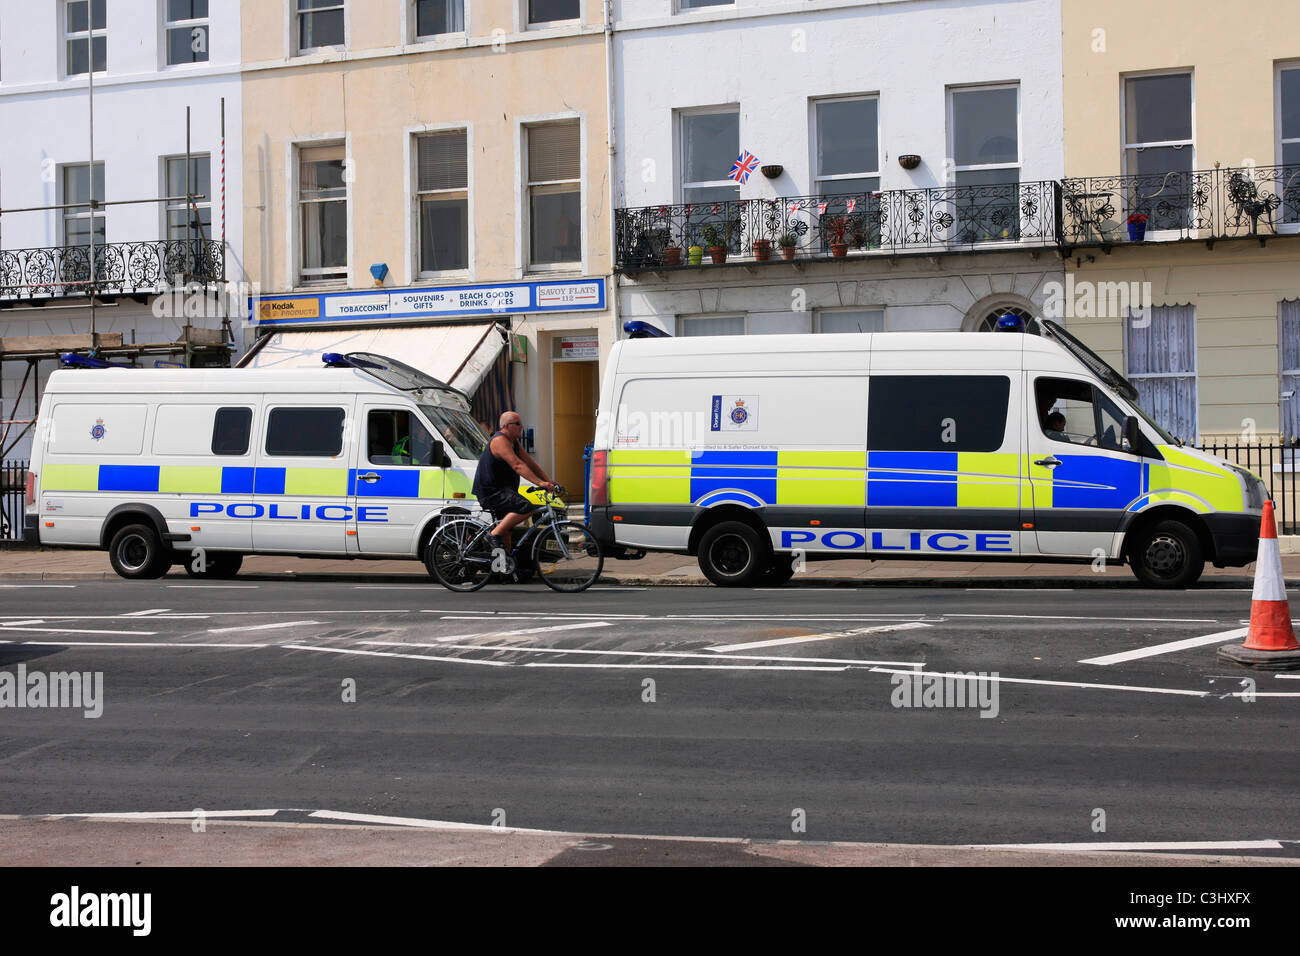 Riot Police vans in Weymouth Dorset Stock Photo